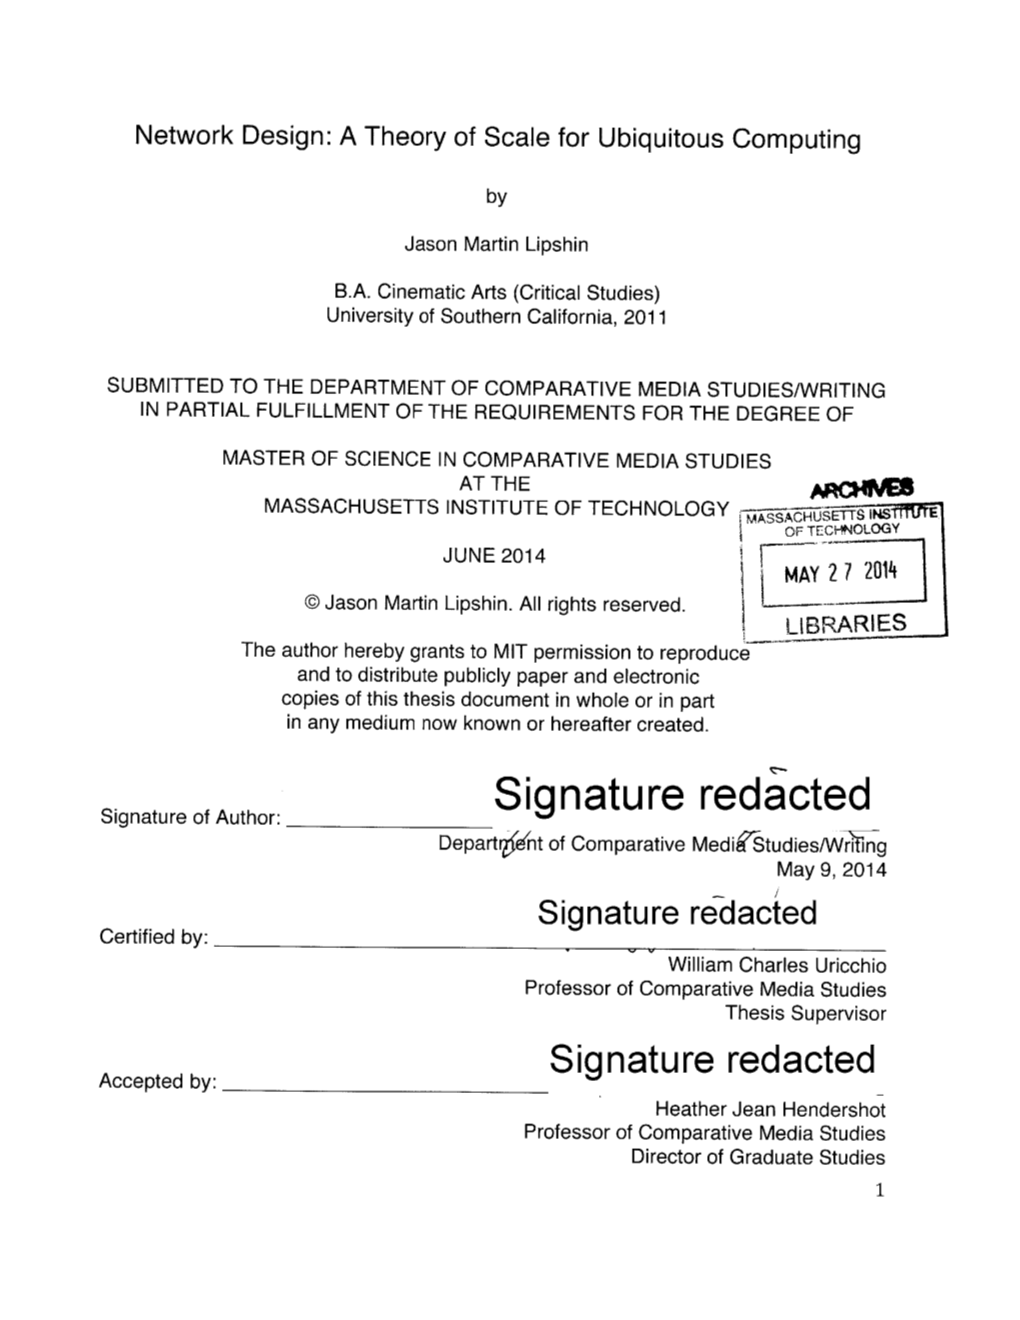 Signature Redacted Departrgnt of Comparative Medi Studies/Wrifing May 9, 2014